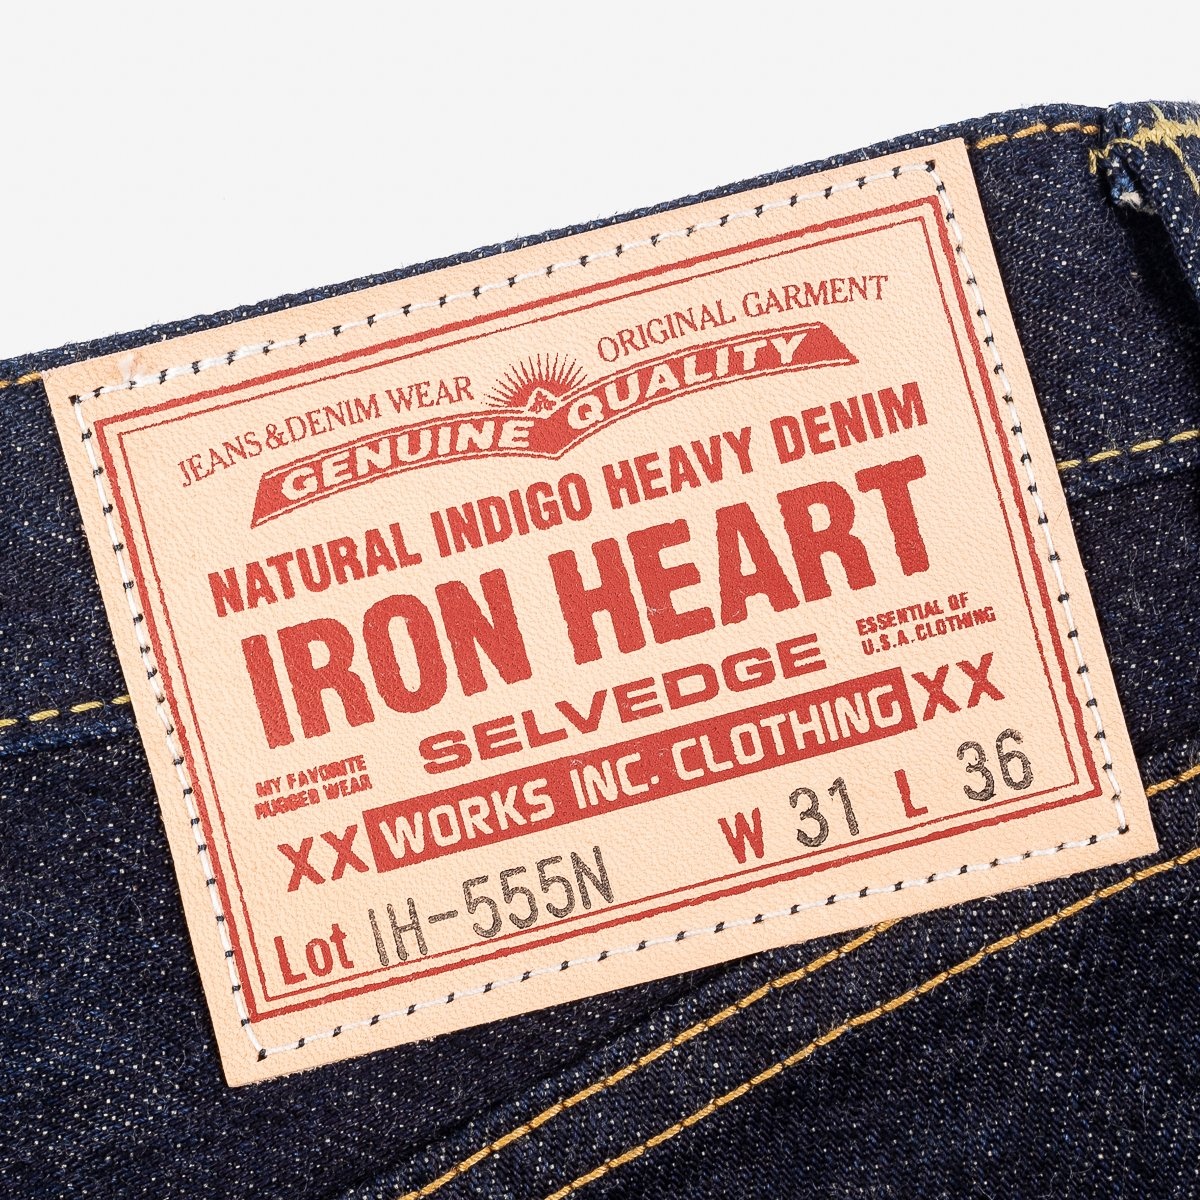 IH-555N 17oz Selvedge Denim Super Slim Cut Jeans - Natural Indigo - 9